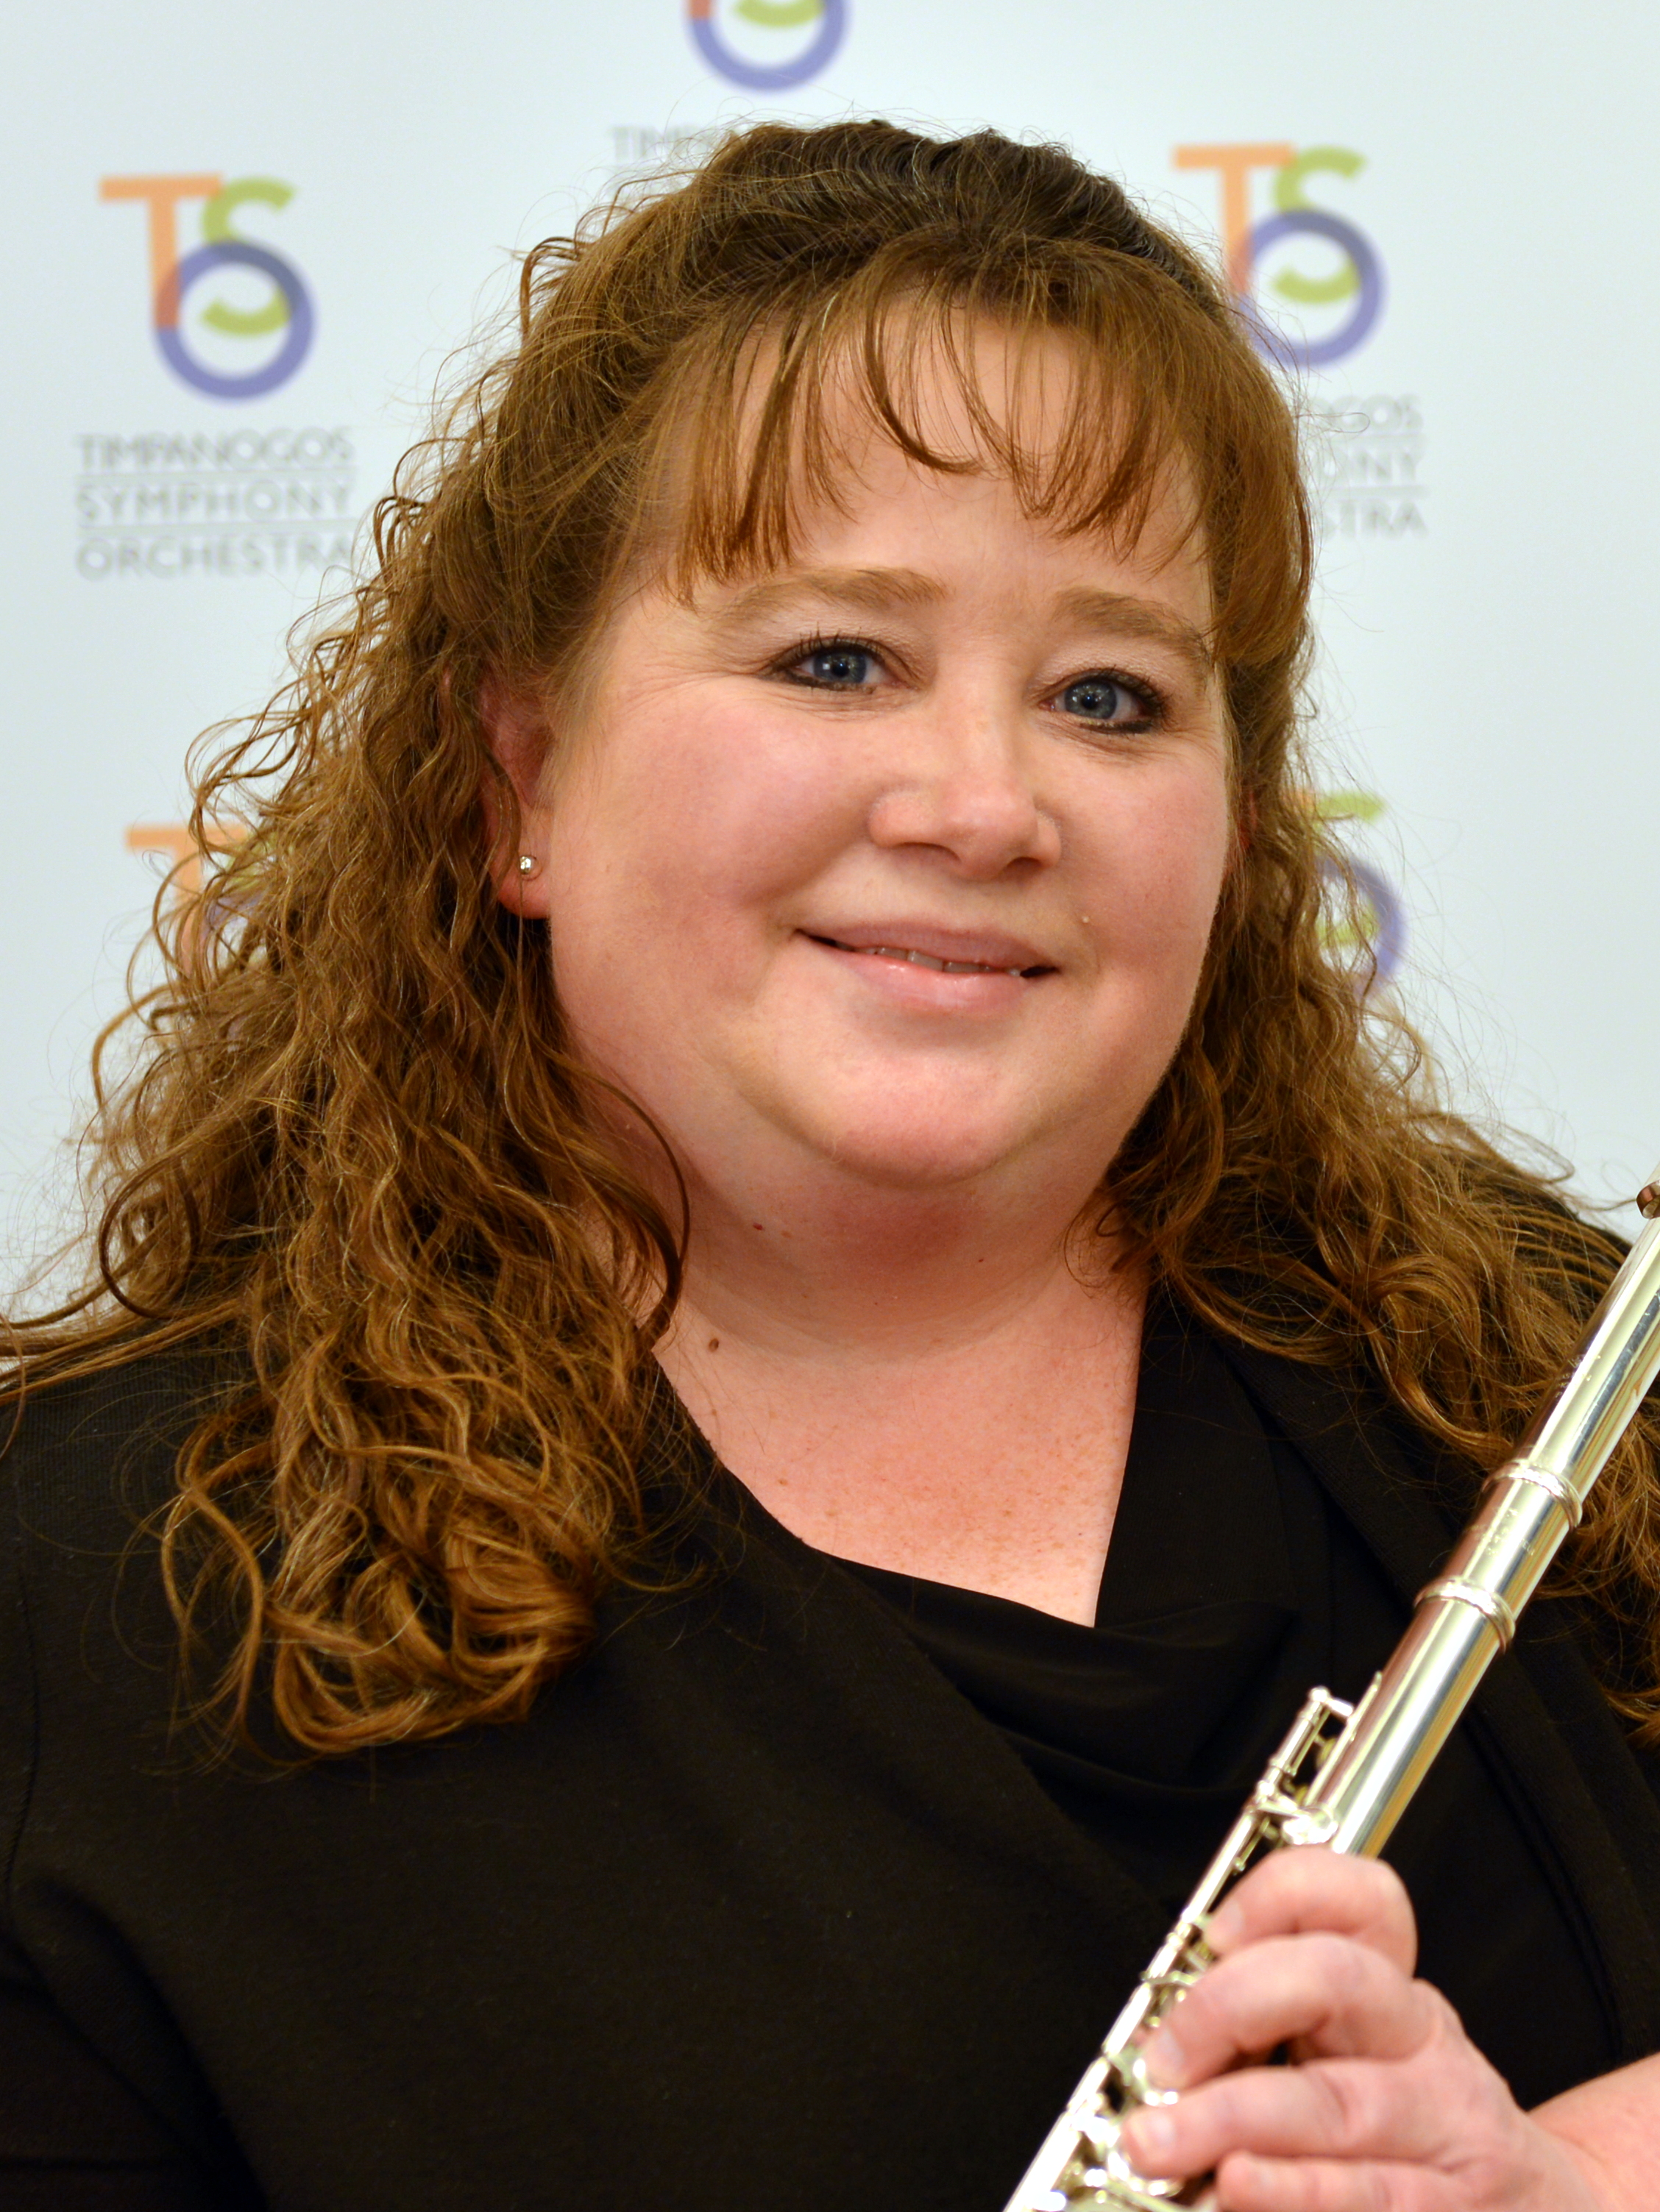 Anjanette Butler, 2nd Flute